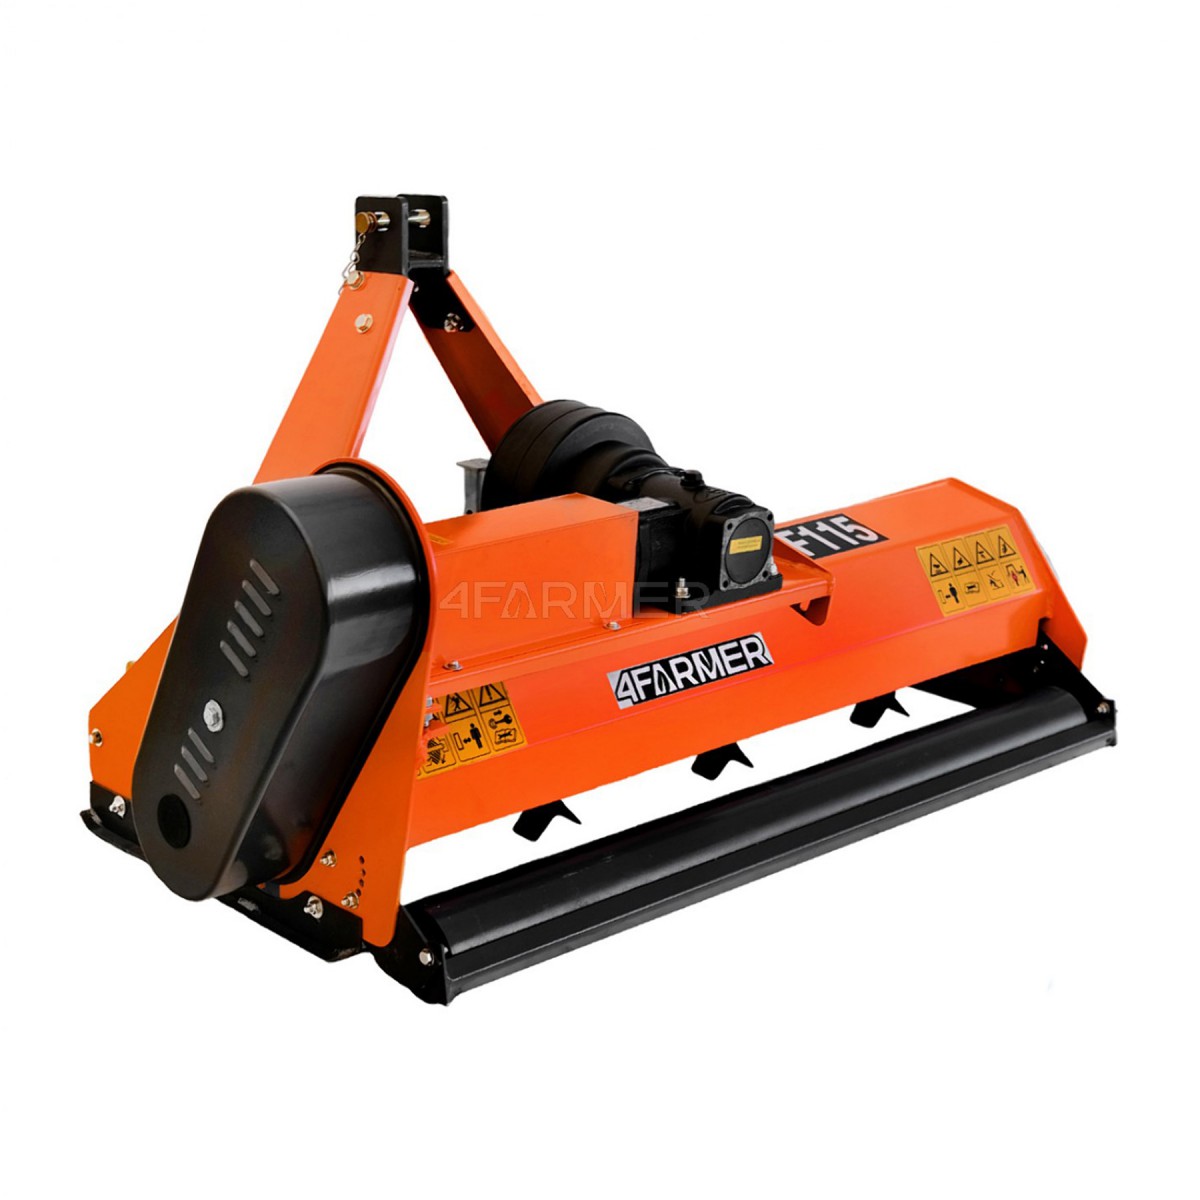 Flail mower EF 115 4FARMER - orange